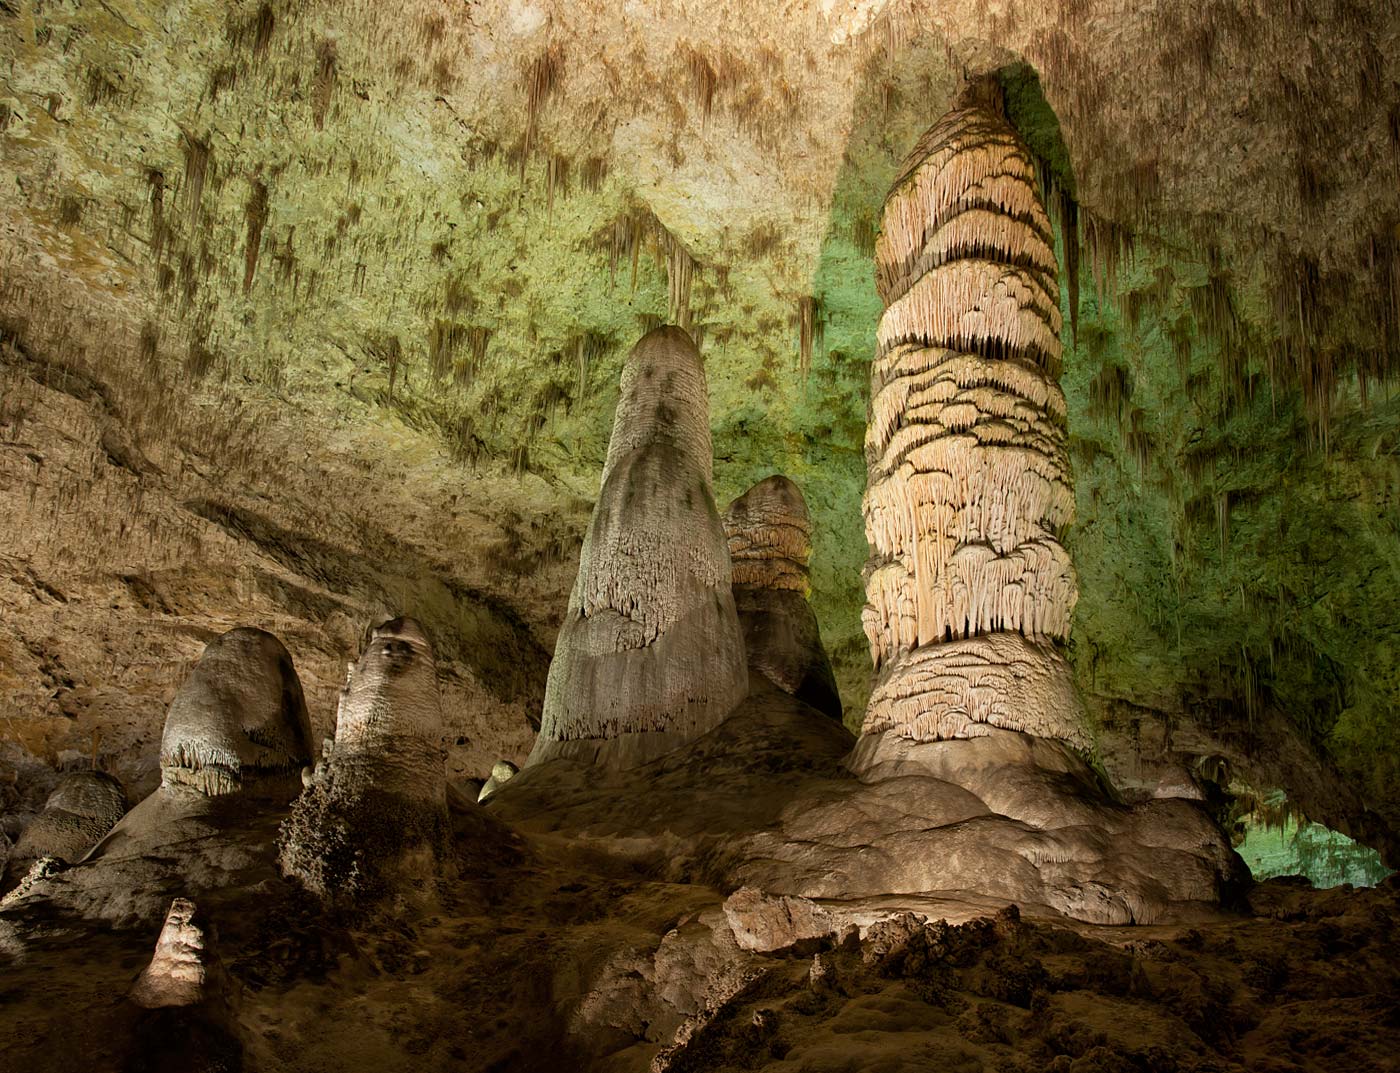 Carlsbad-Caverns-National-Park-ABP-Hall-of-Giants2.jpg